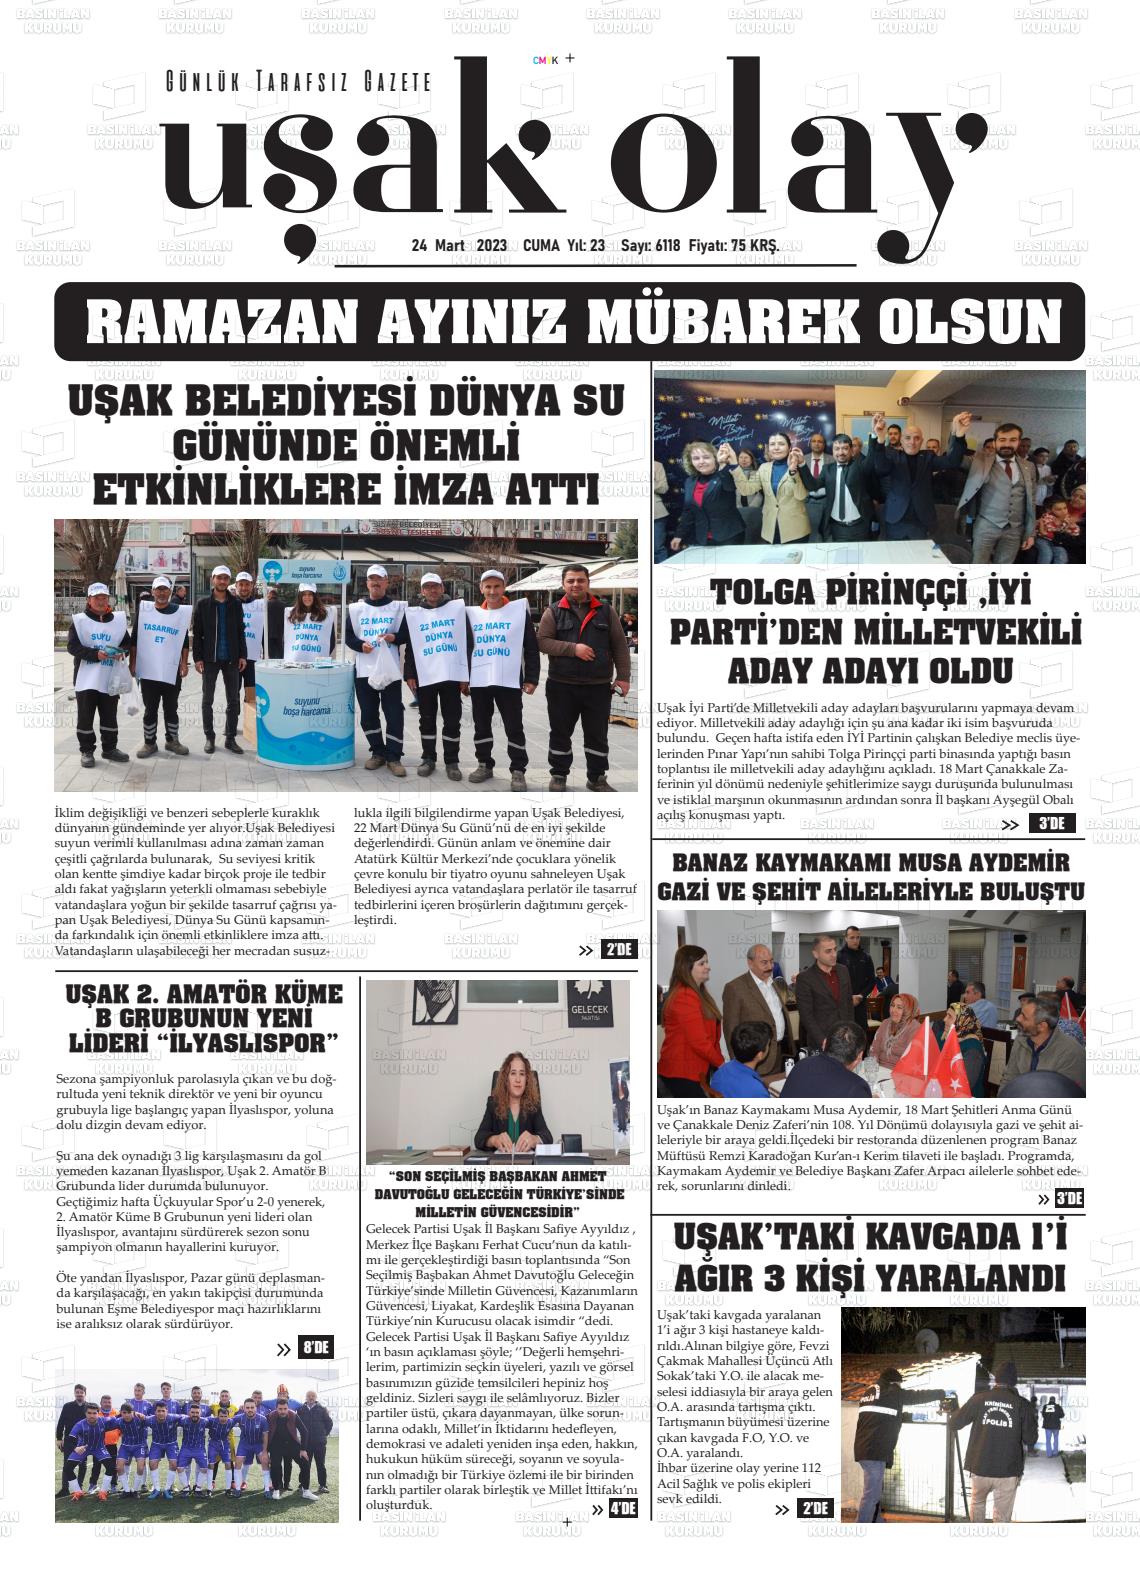 24 Mart 2023 Uşak Olay Gazete Manşeti